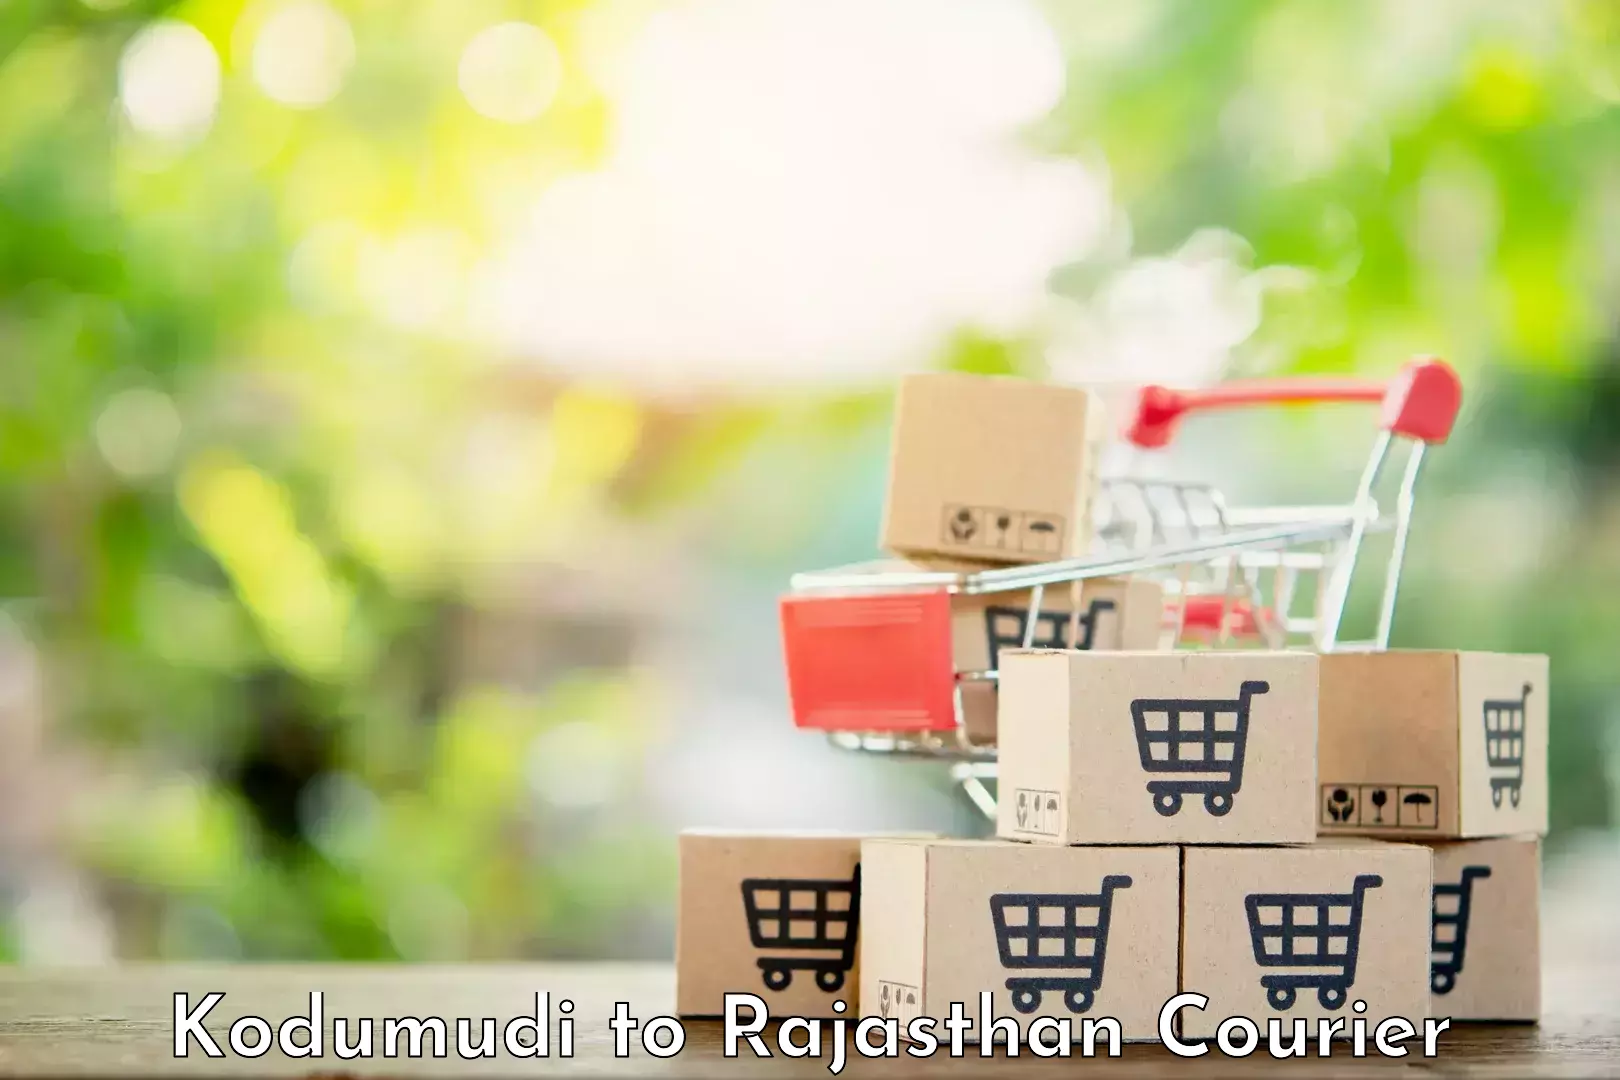 International courier networks Kodumudi to Rajasthan